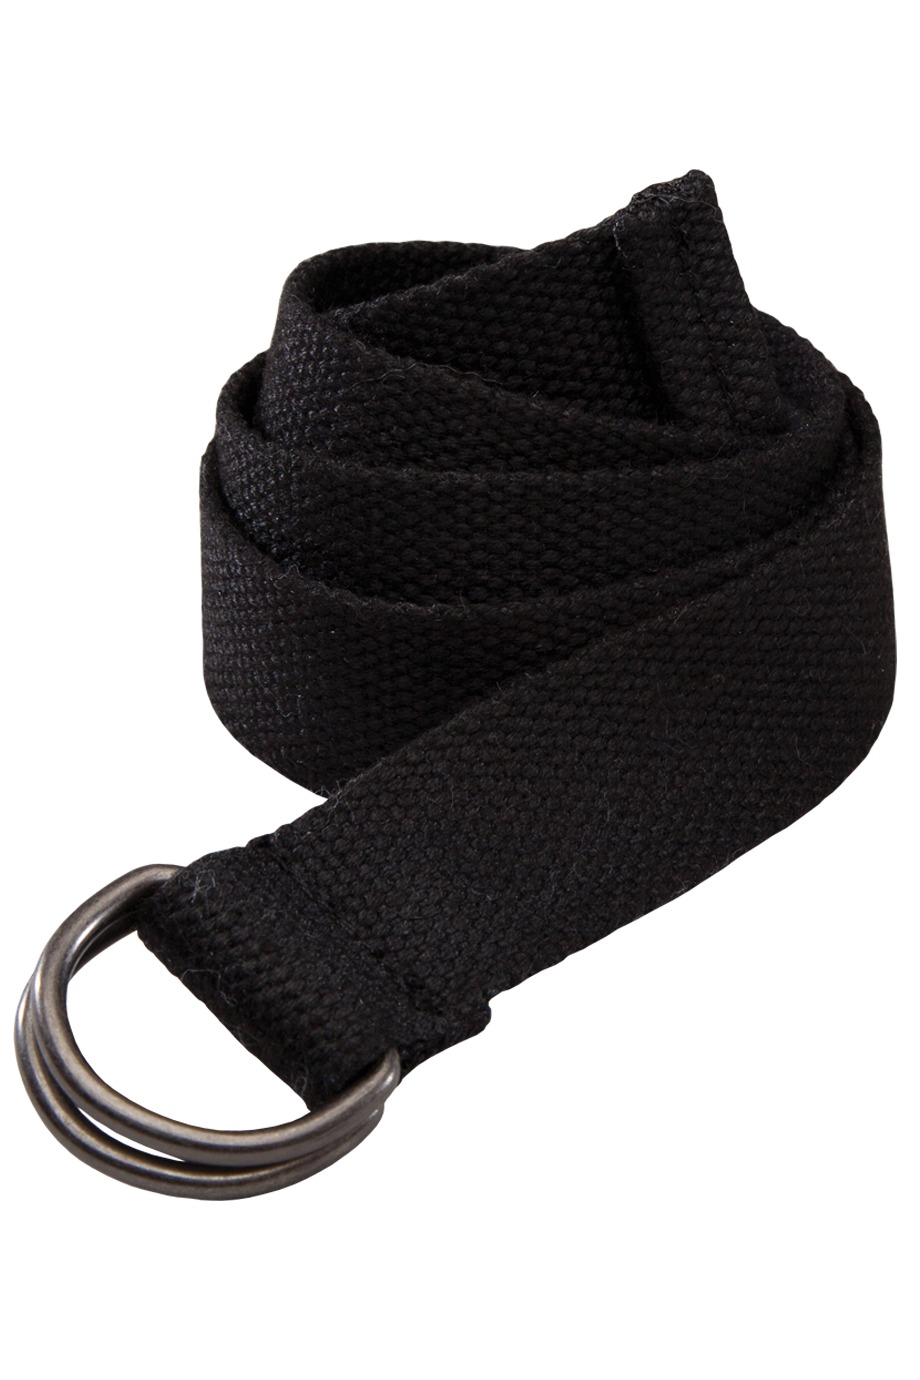 Edwards Garment WD00 - D-Ring Web Belt